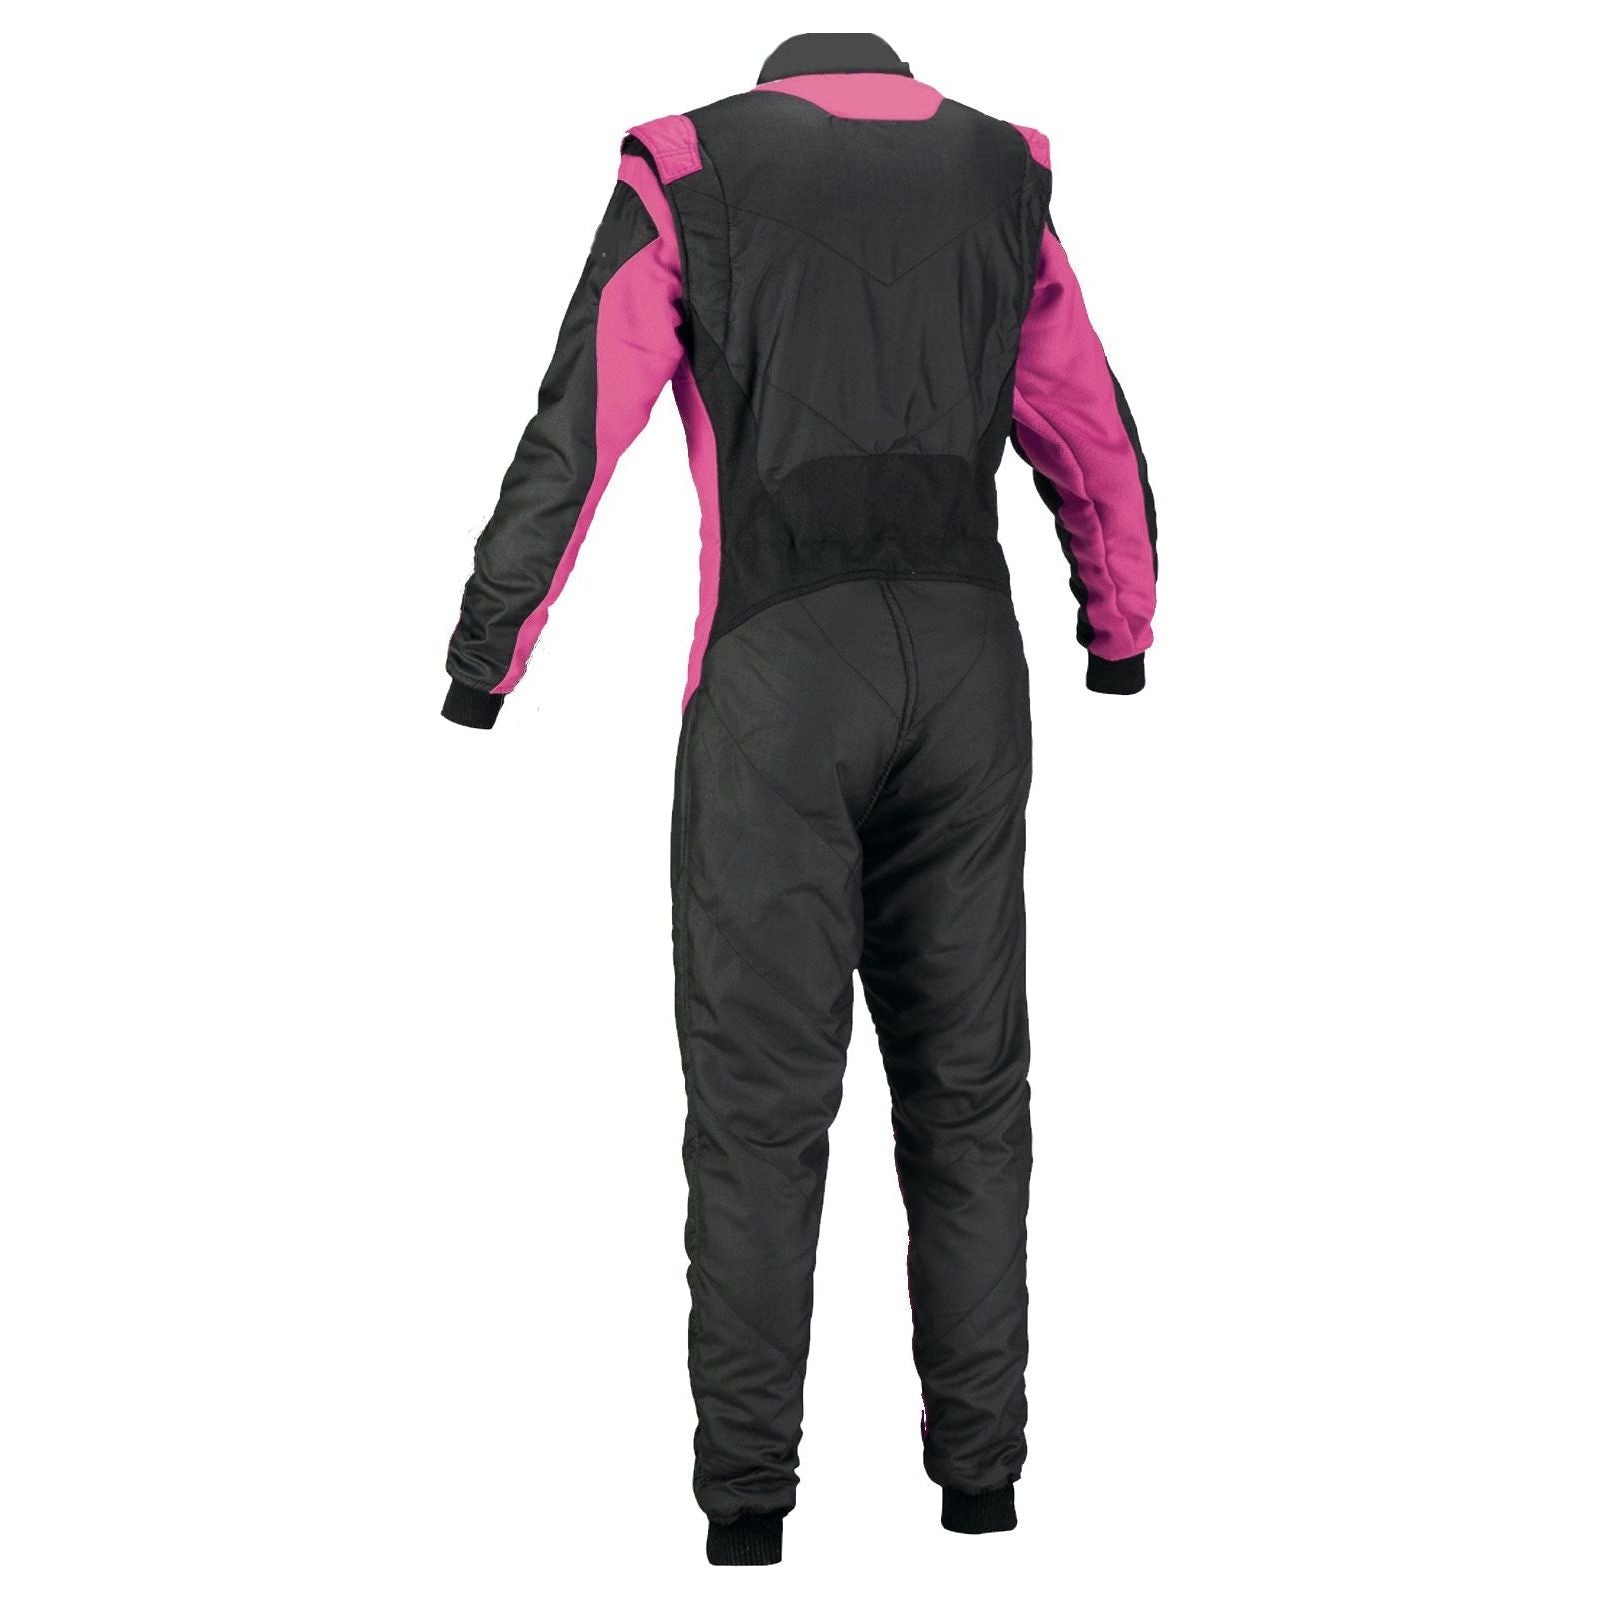 Kart Racing Costume Homme/Femme couleur Rose Et Noir KWX4